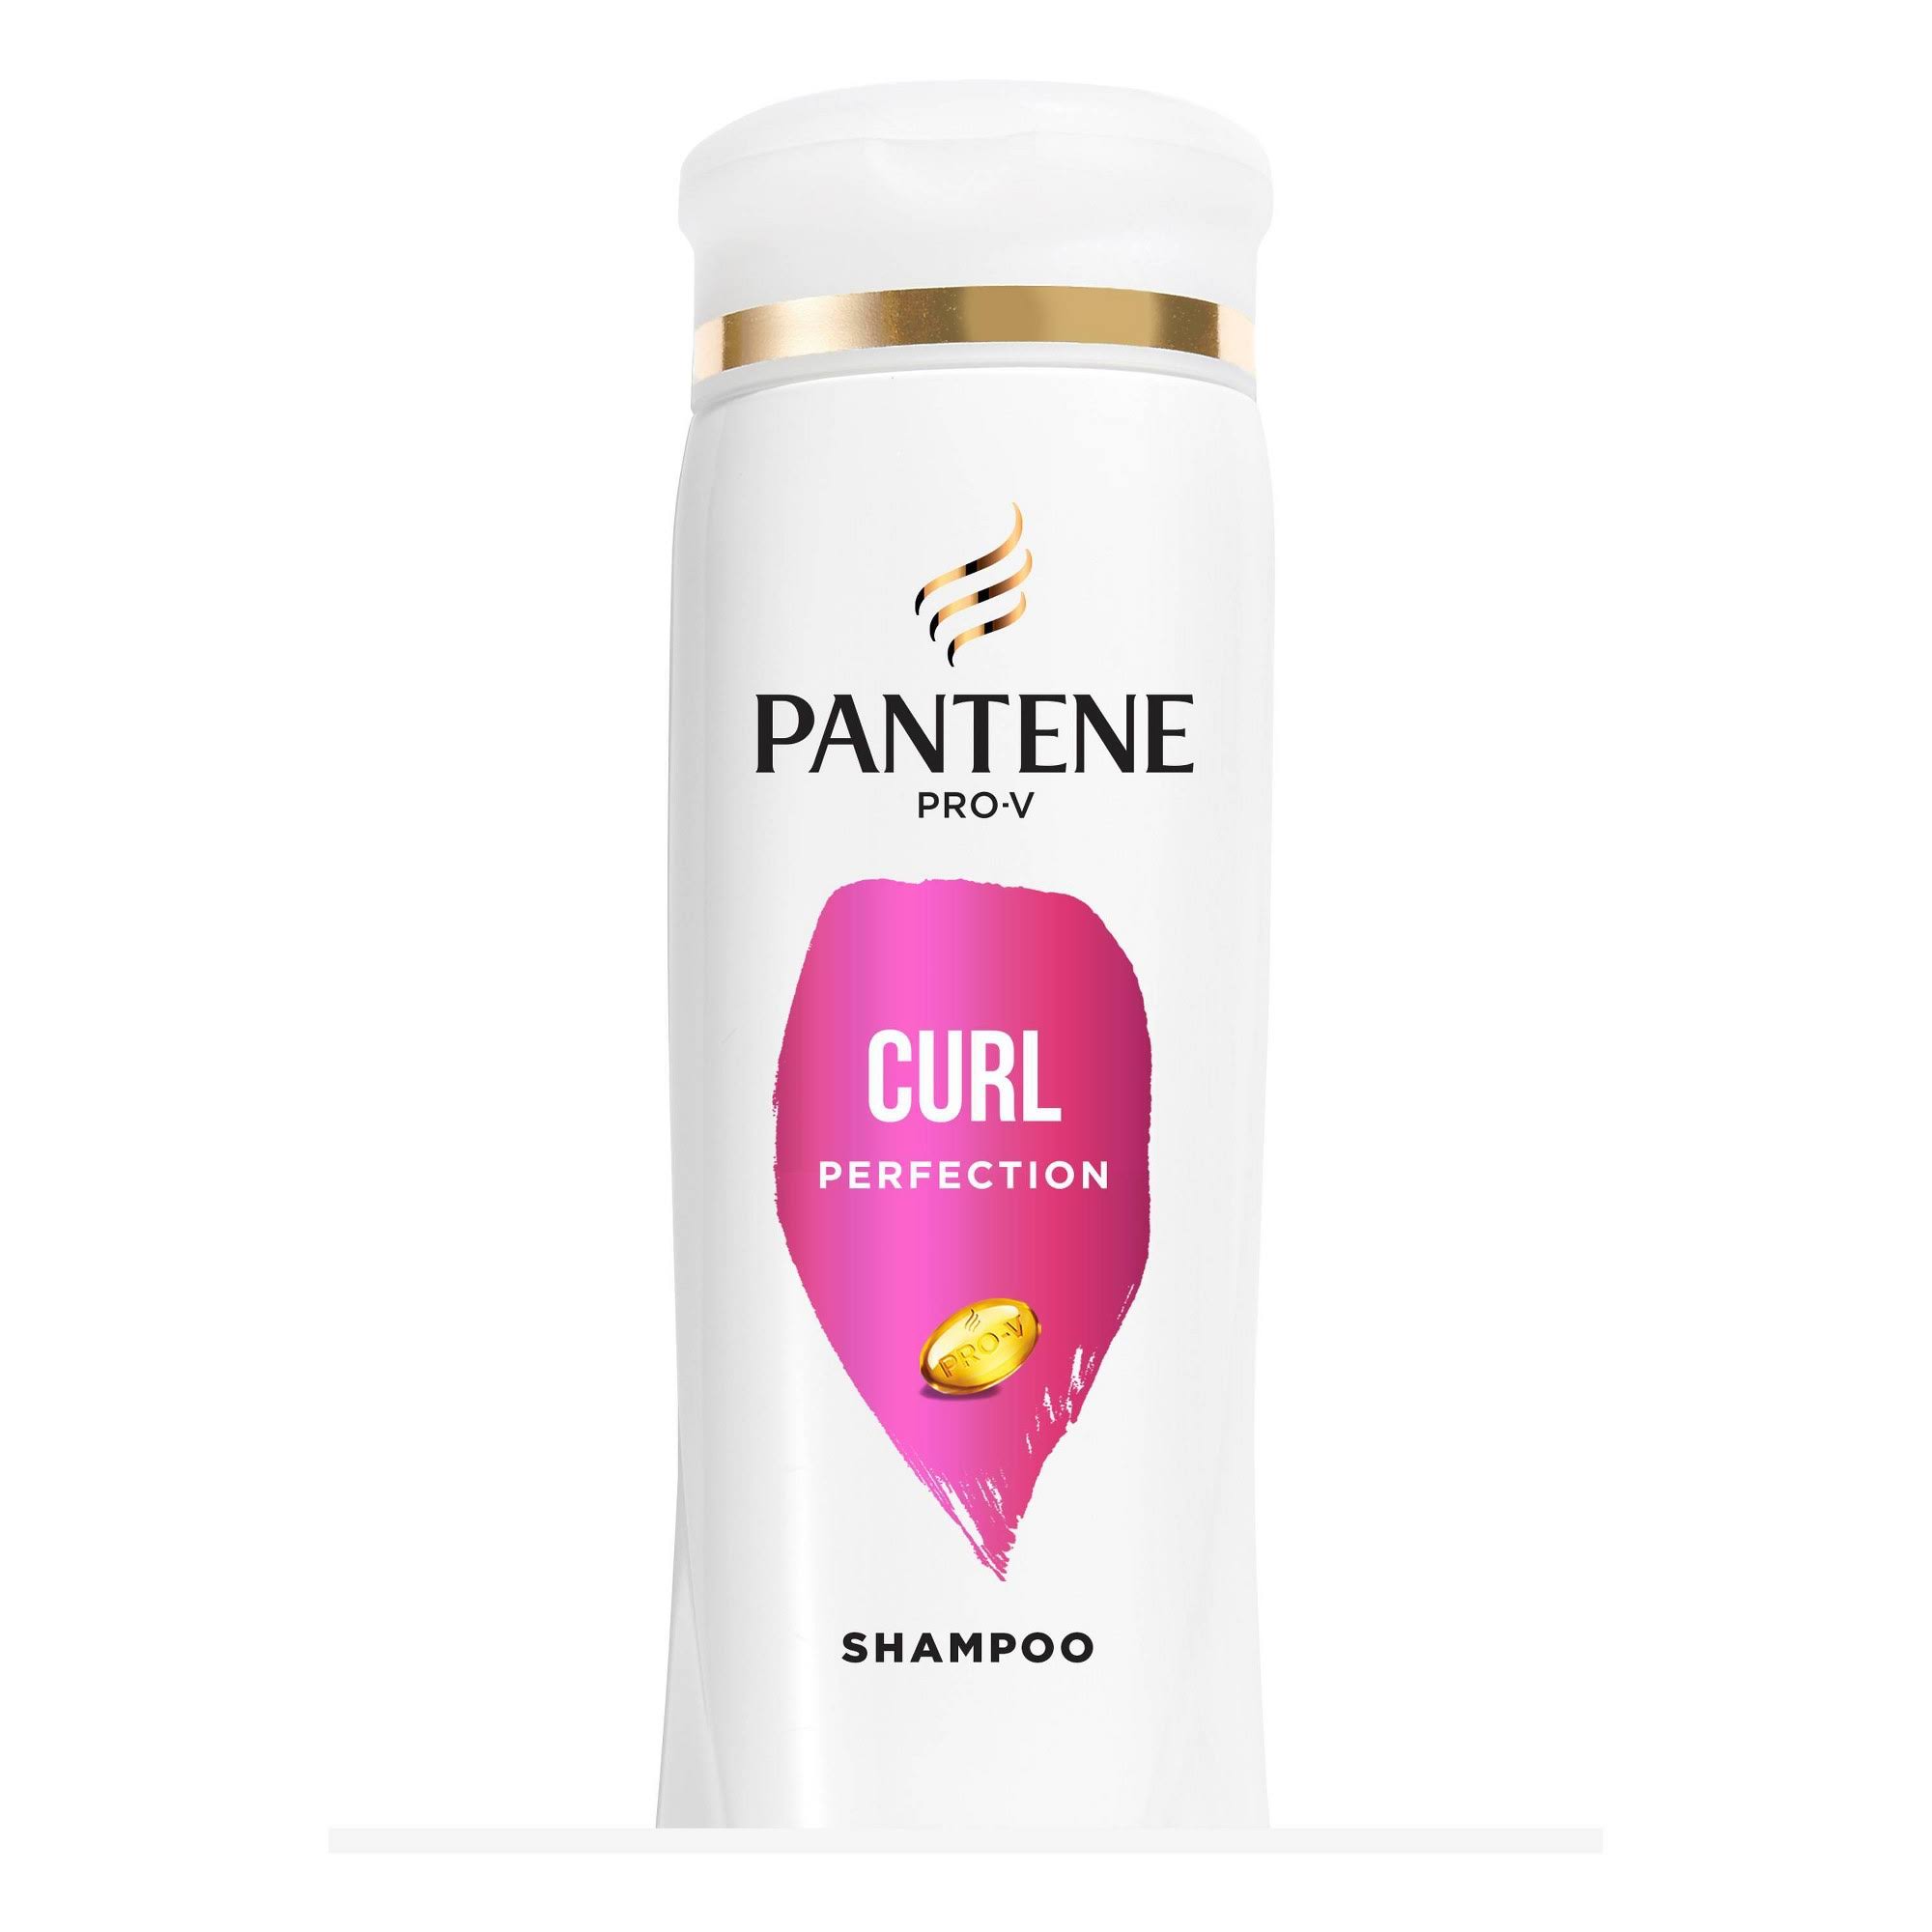 Pantene Pro-V Shampoo, Curl Perfection - 355 ml